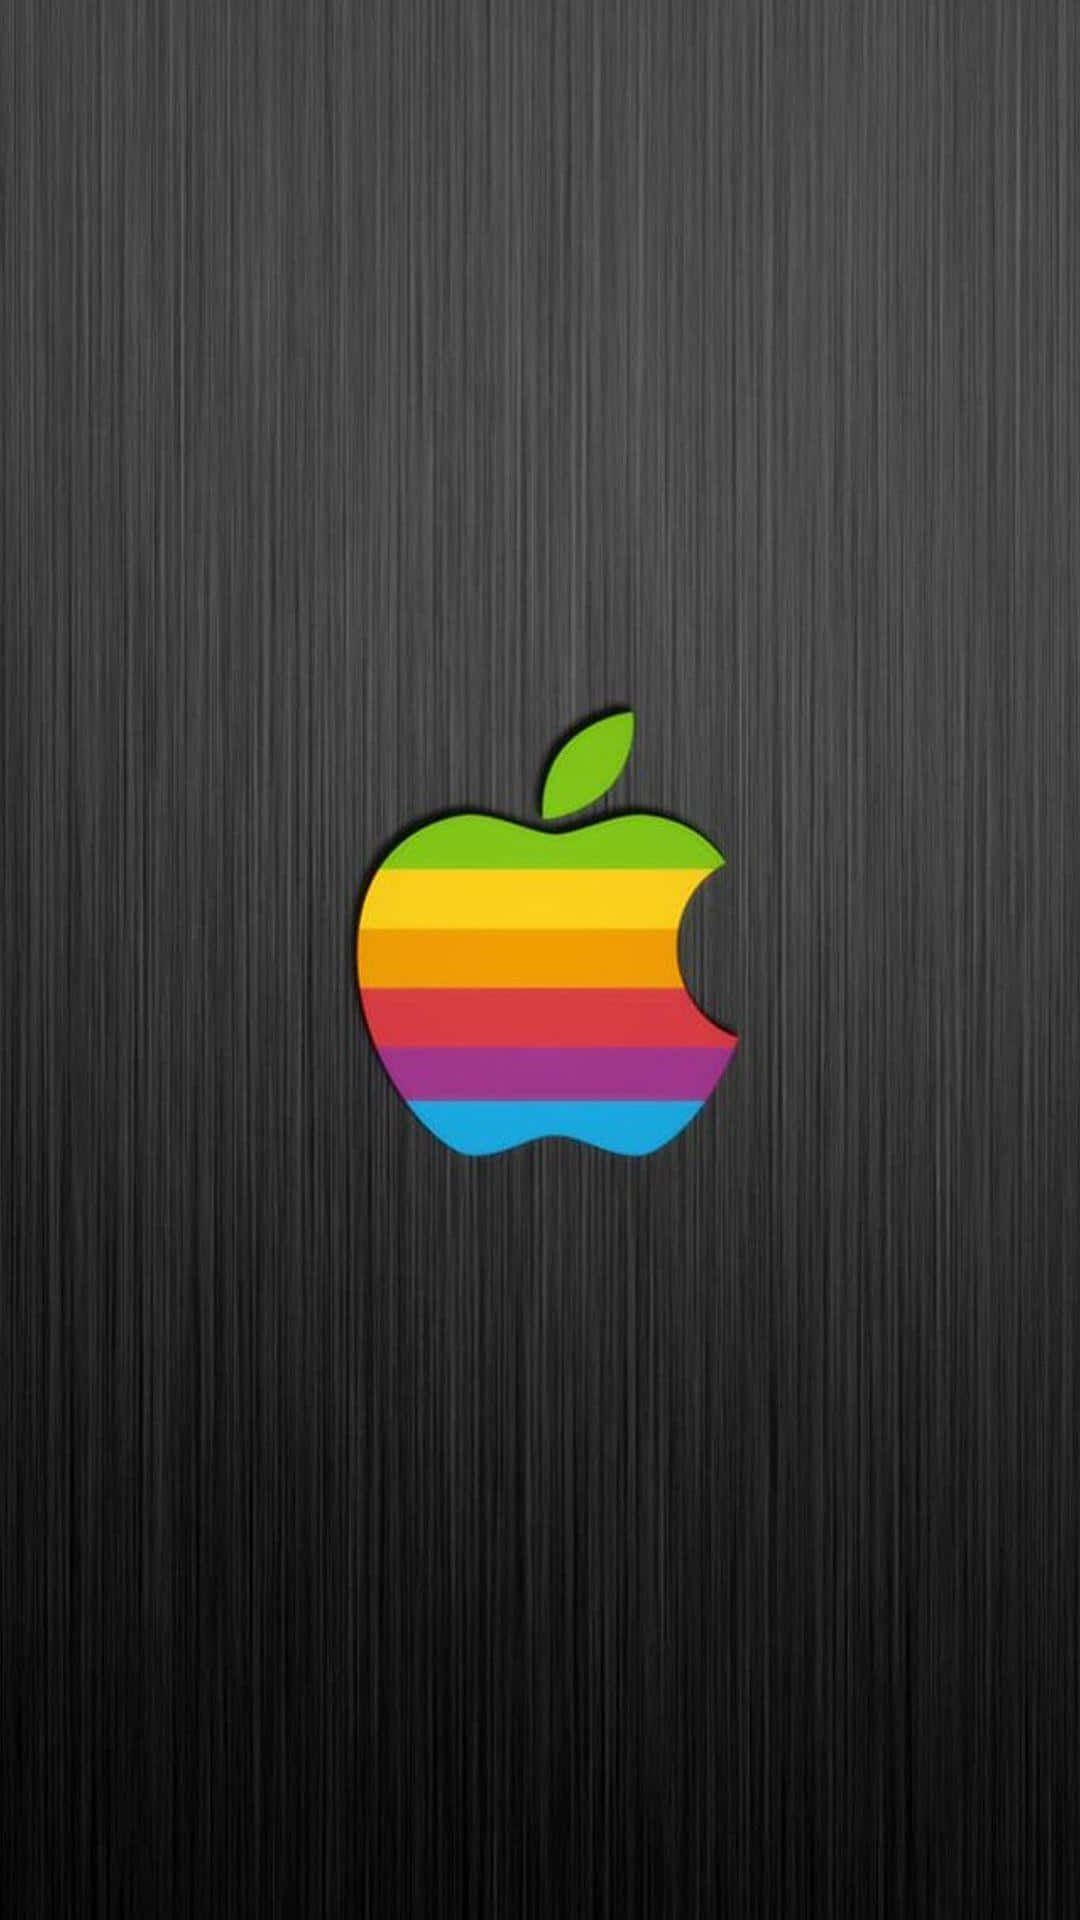 Fondode Pantalla De Textura De Madera Con El Logo De Apple En Pixel 3